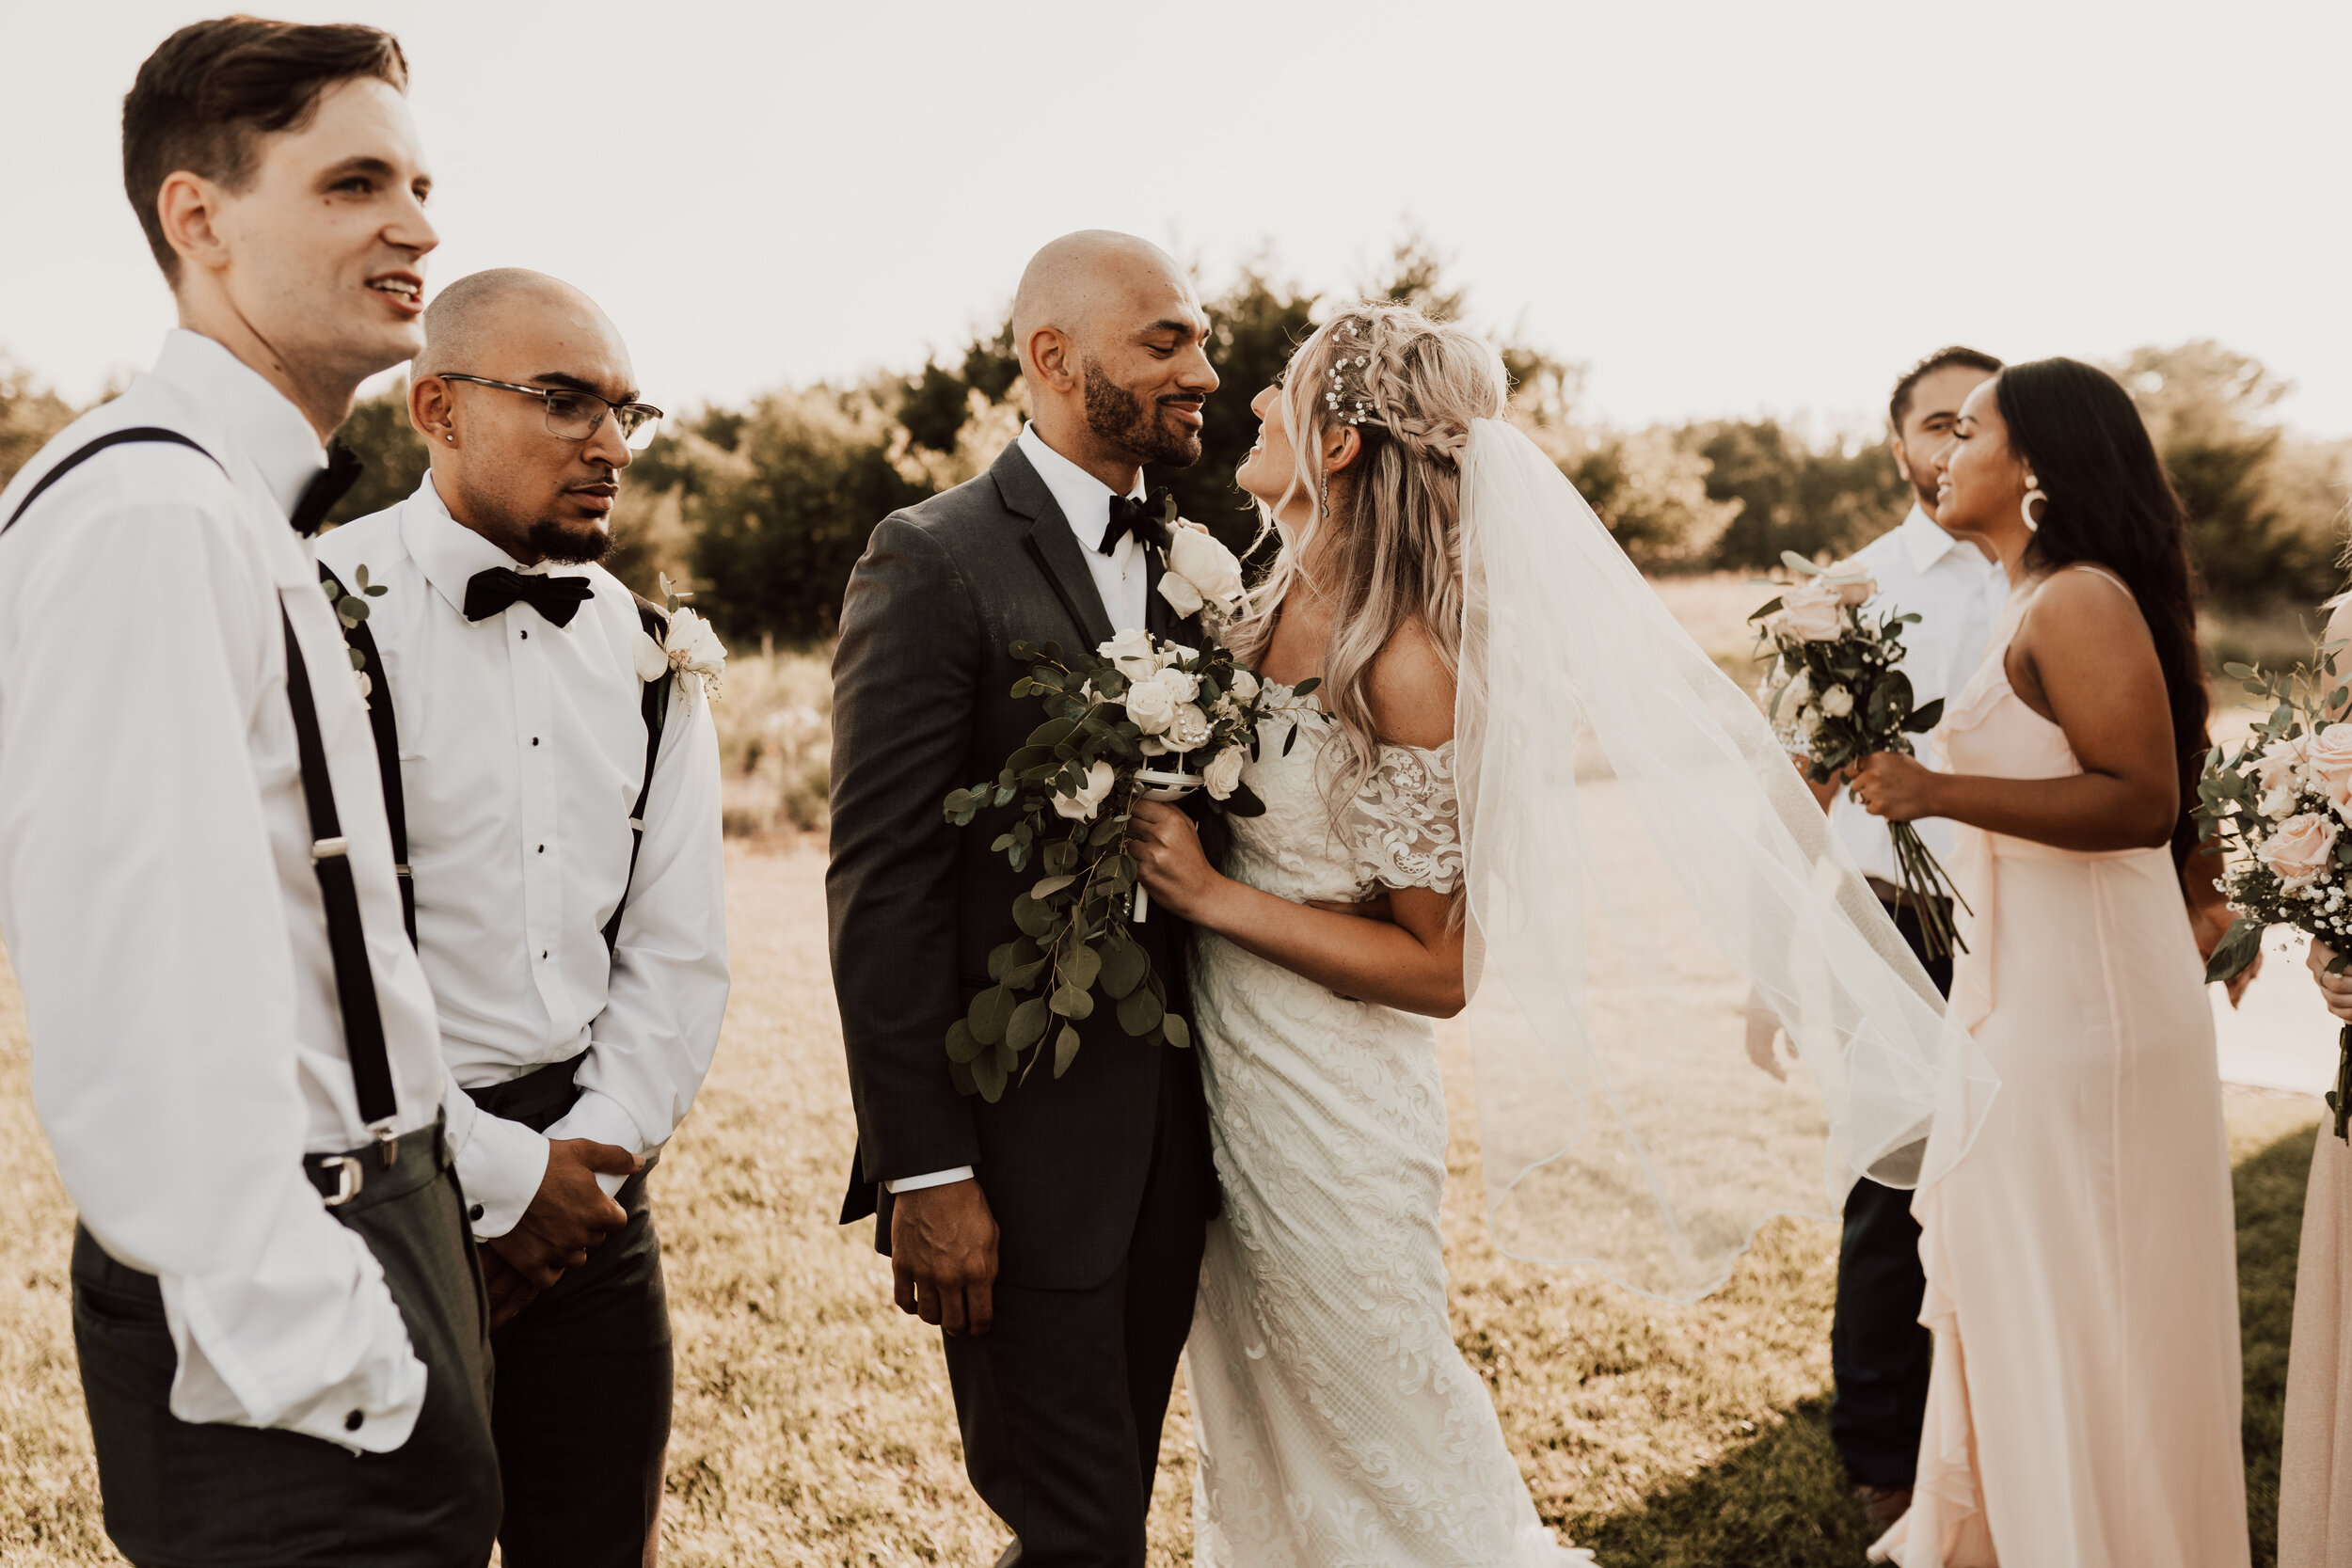 Hayley + Lorenzo - Summer White Chapel Wedding at Stone Hill Barn in Augusta, Kansas170.jpg